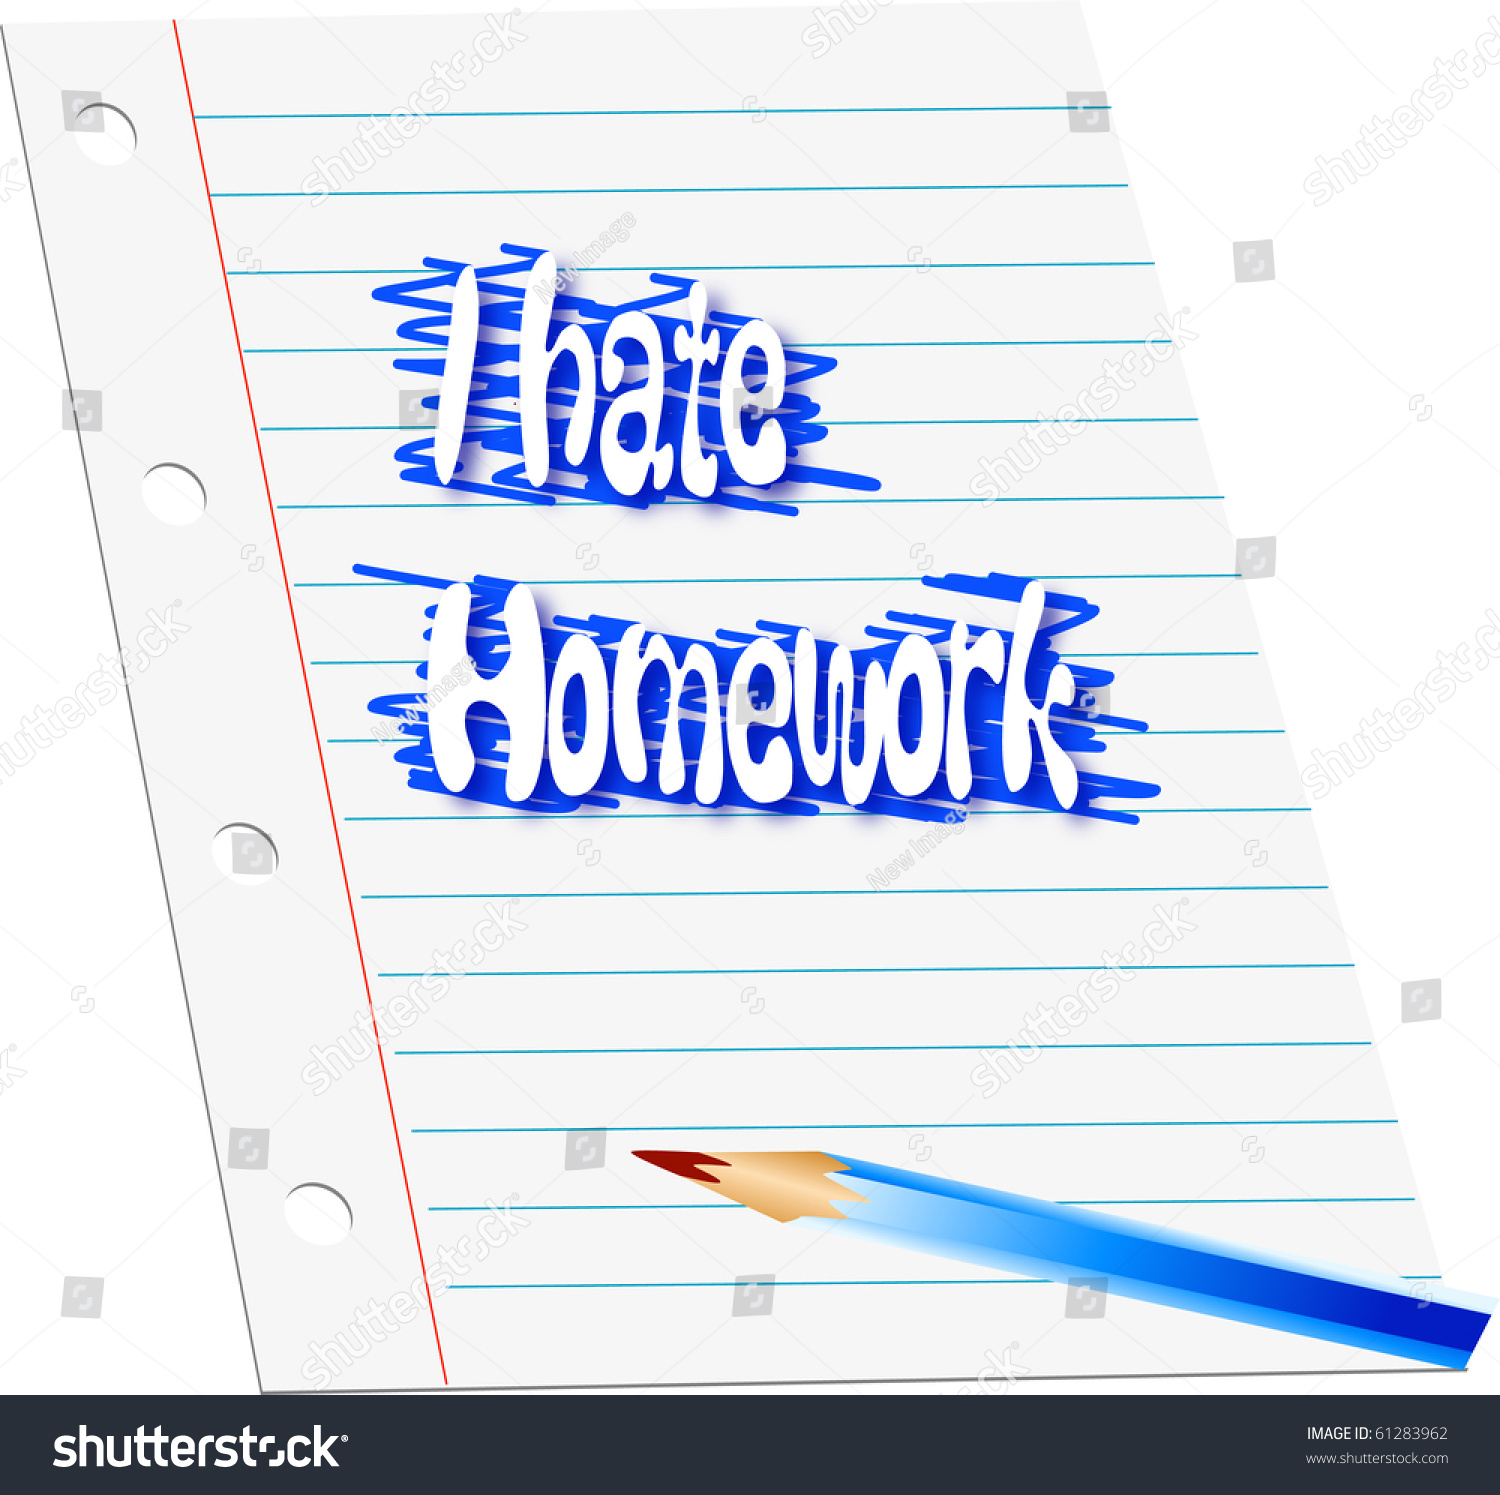 Do my homework write my papers